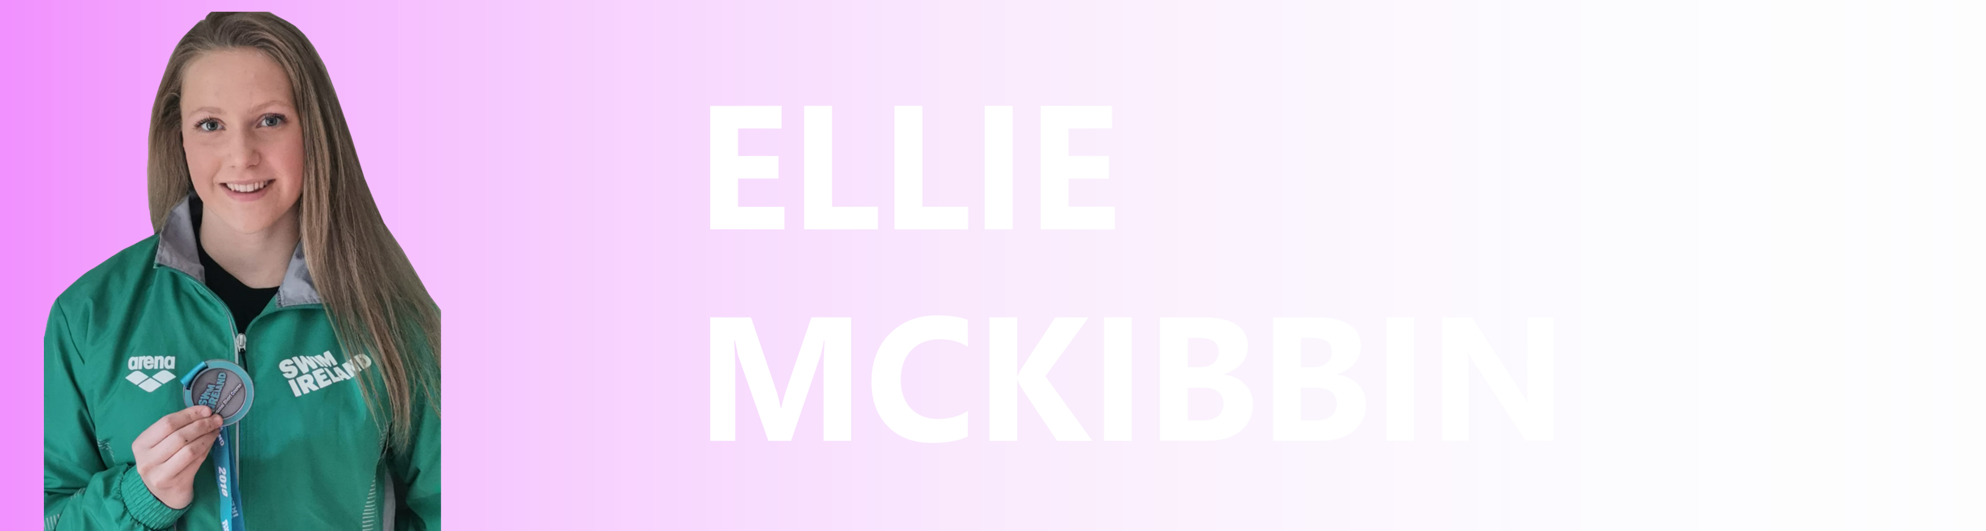 Ellie McKibbin SwimPath Team Profile